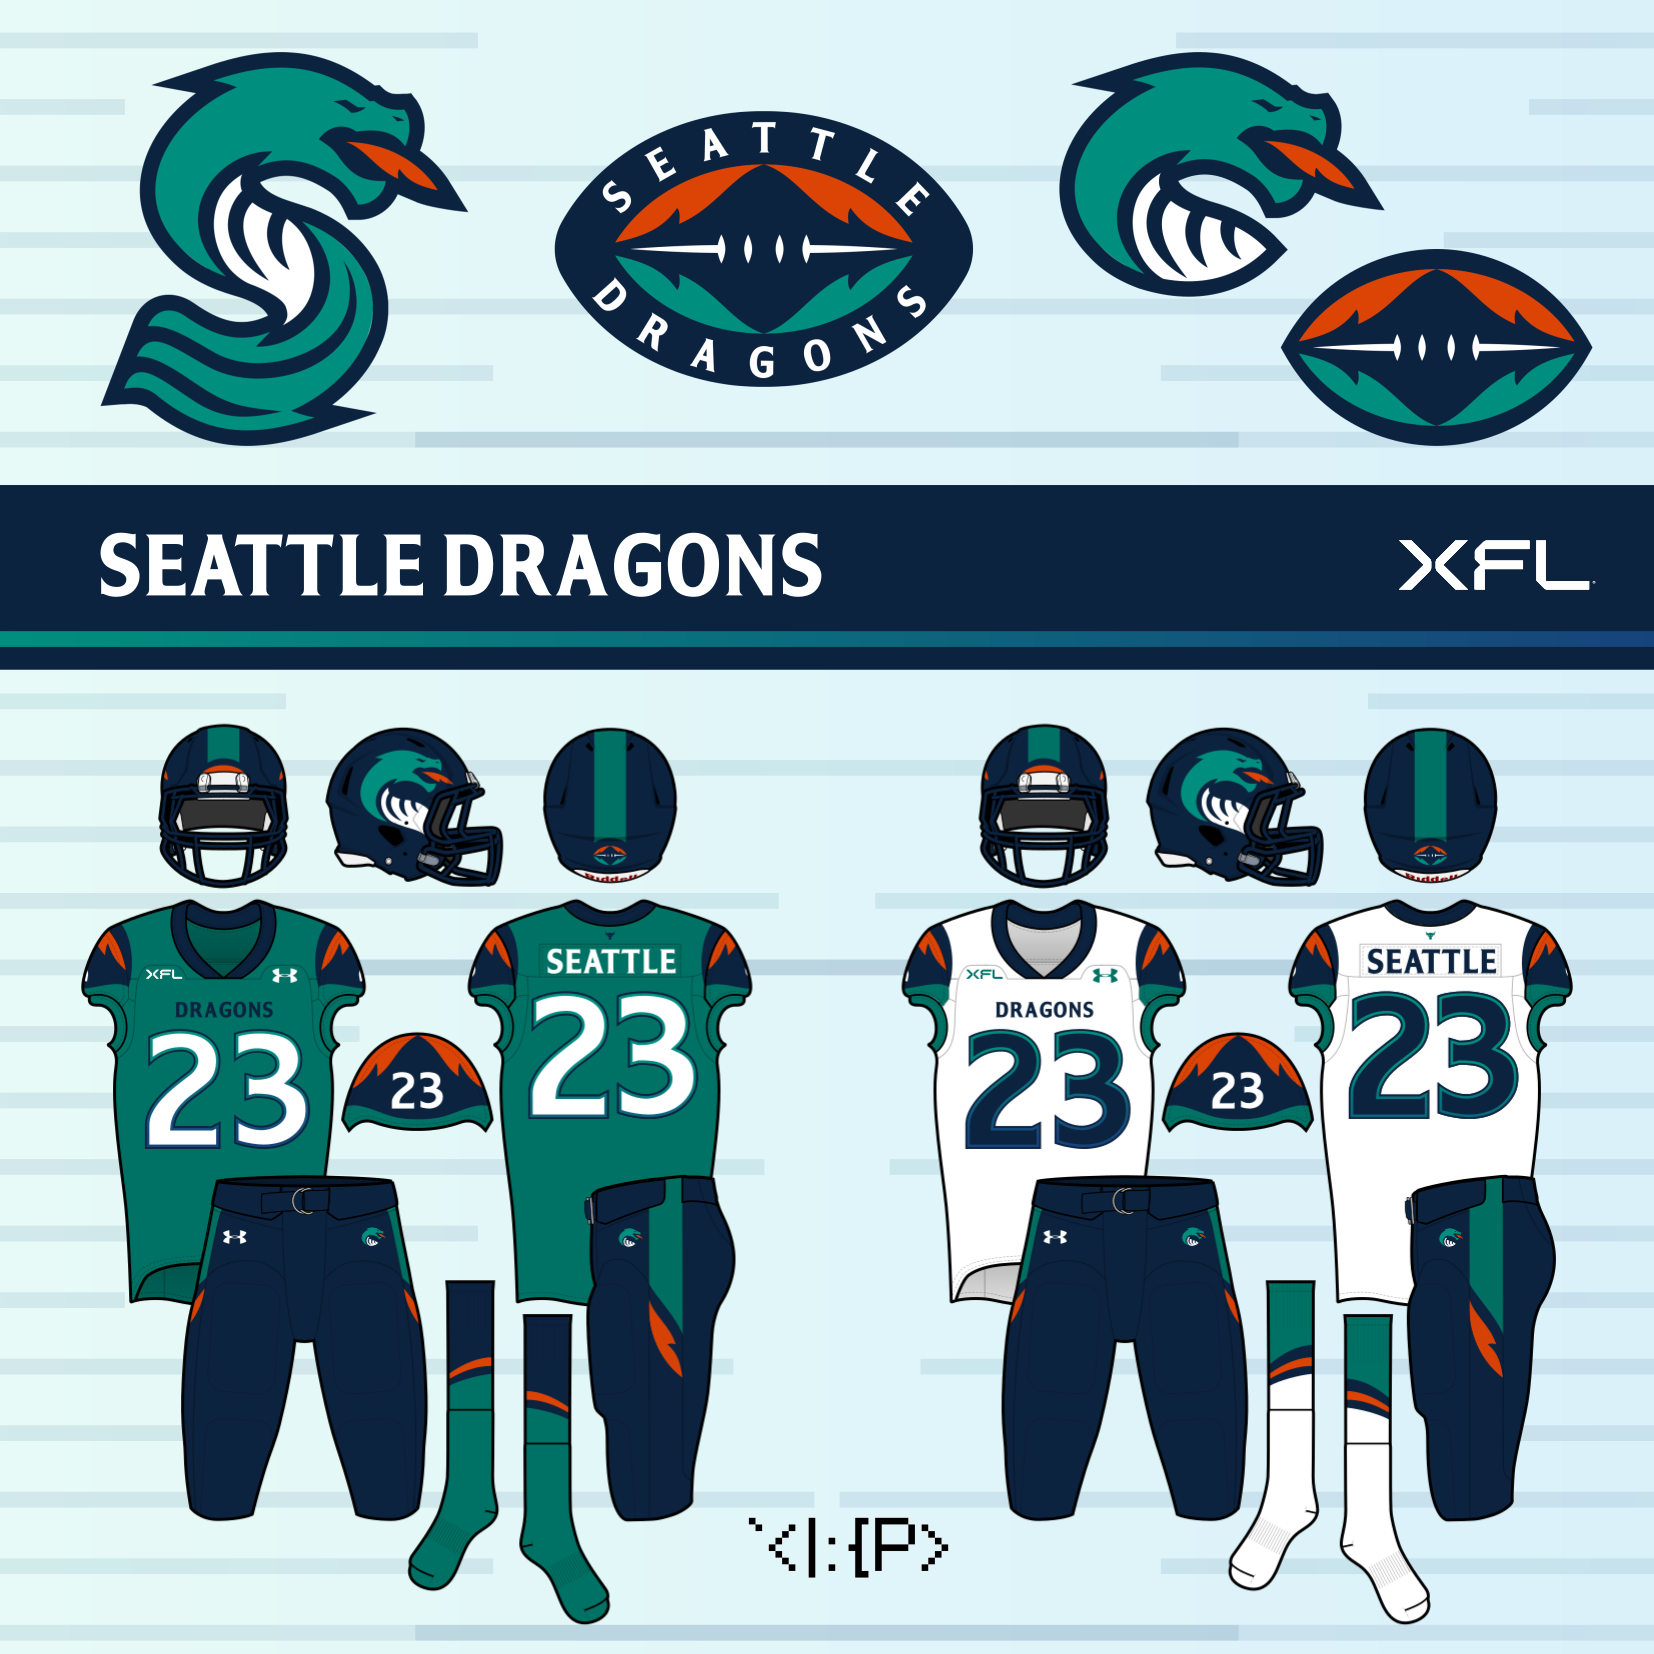 Seattle Dragons XFL concept - Concepts - Chris Creamer's Sports Logos  Community - CCSLC - SportsLogos.Net Forums